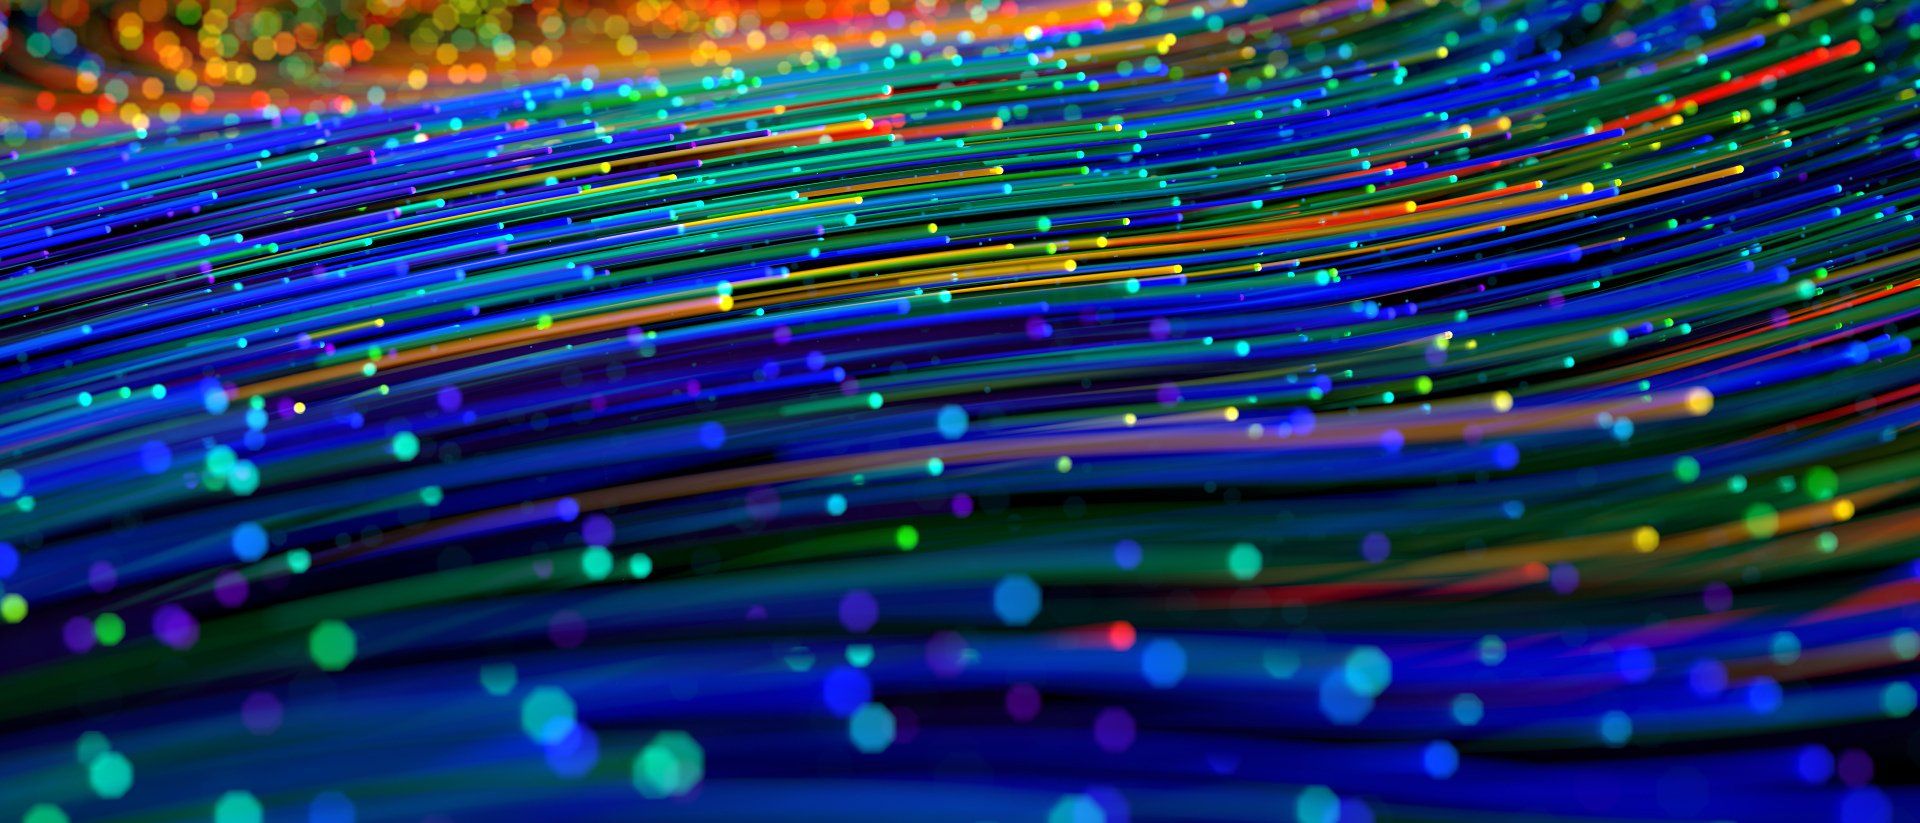 Colorful multimode optical fiber delivers high bandwidth data